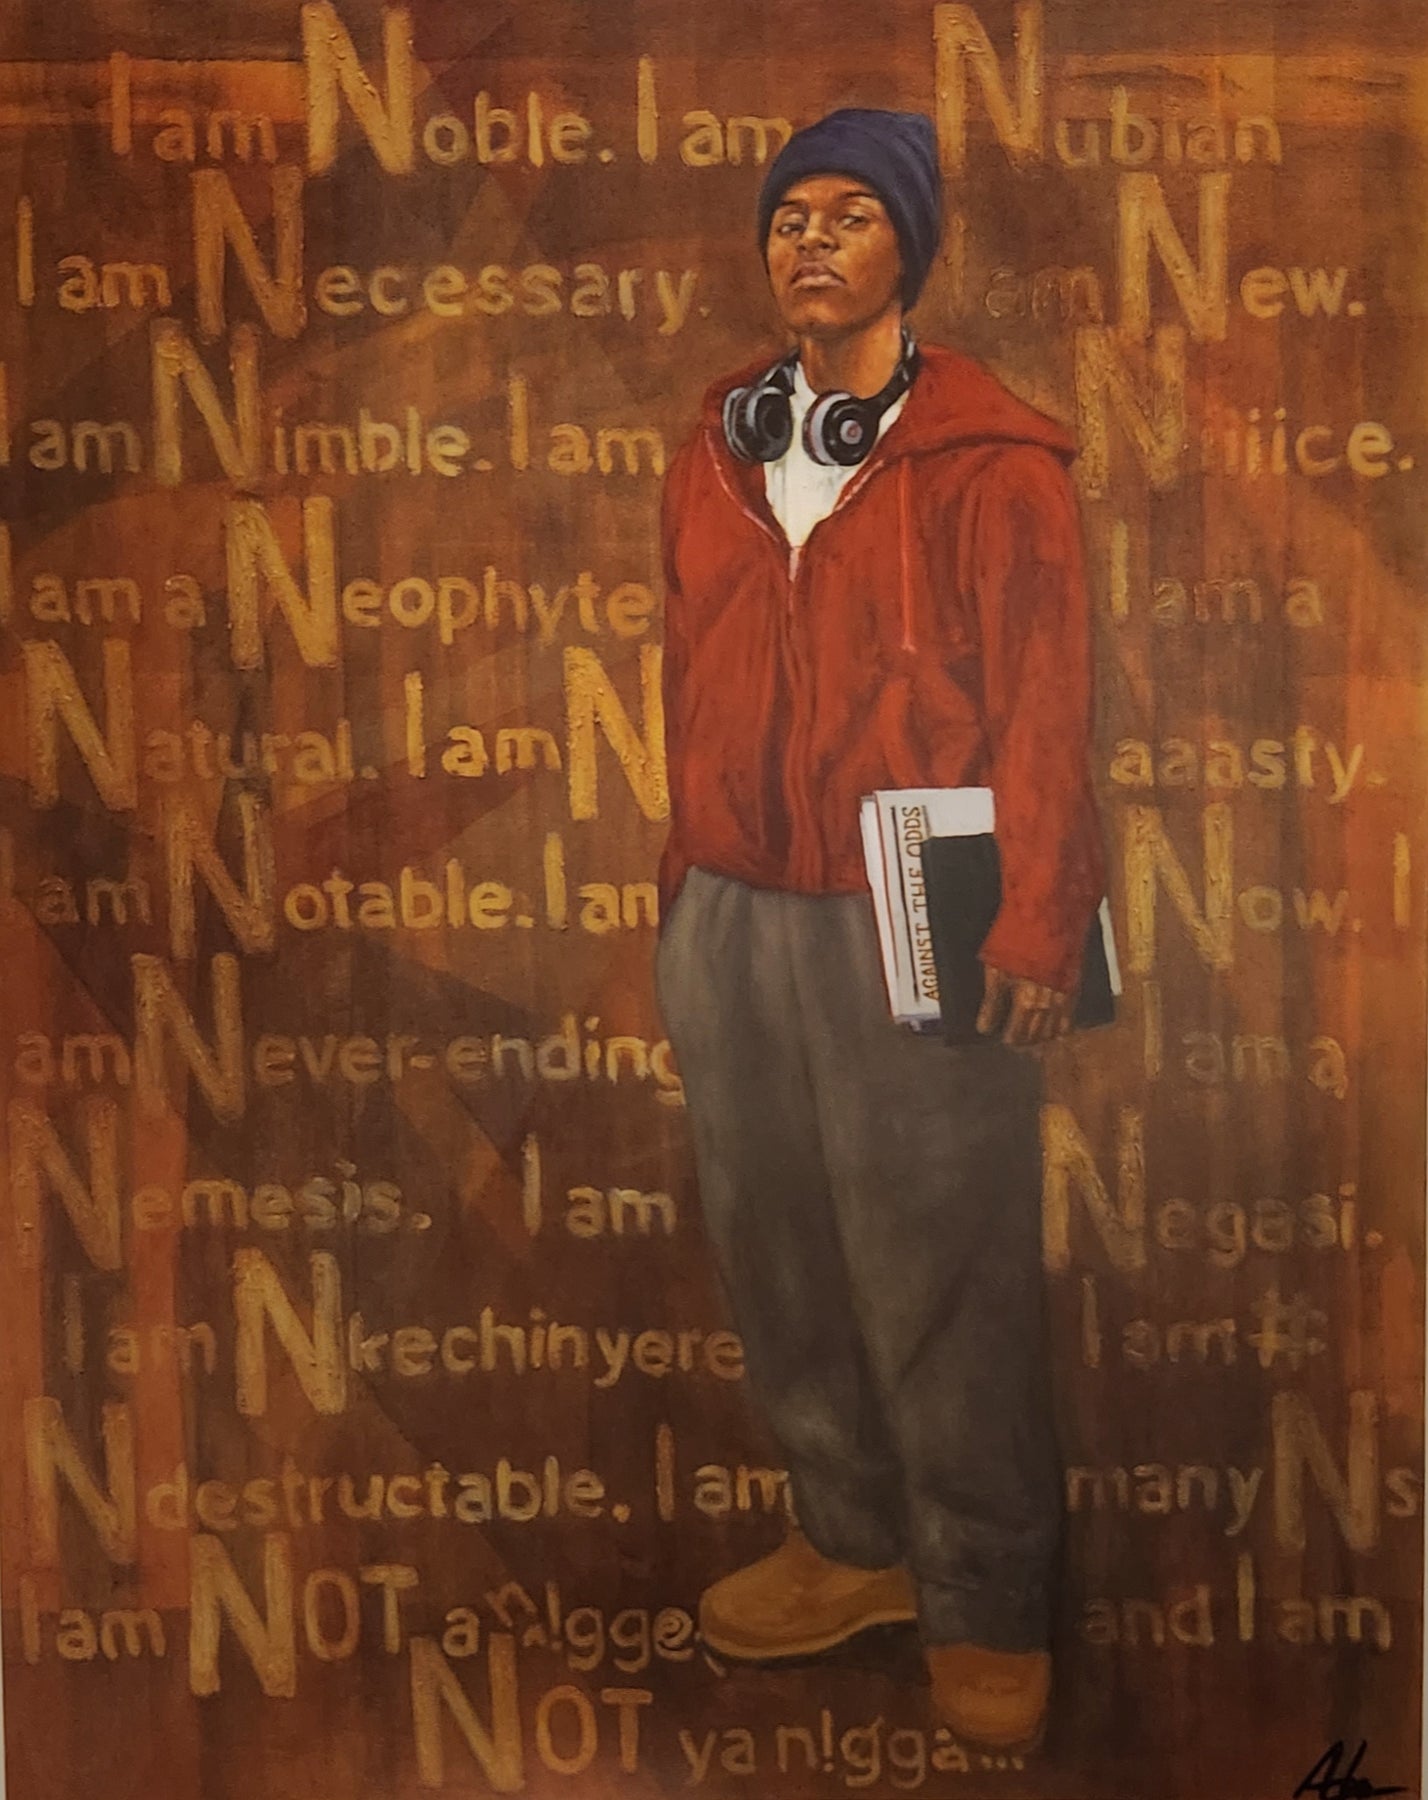 1 of 2: I Am the N Word by Alonzo Adams